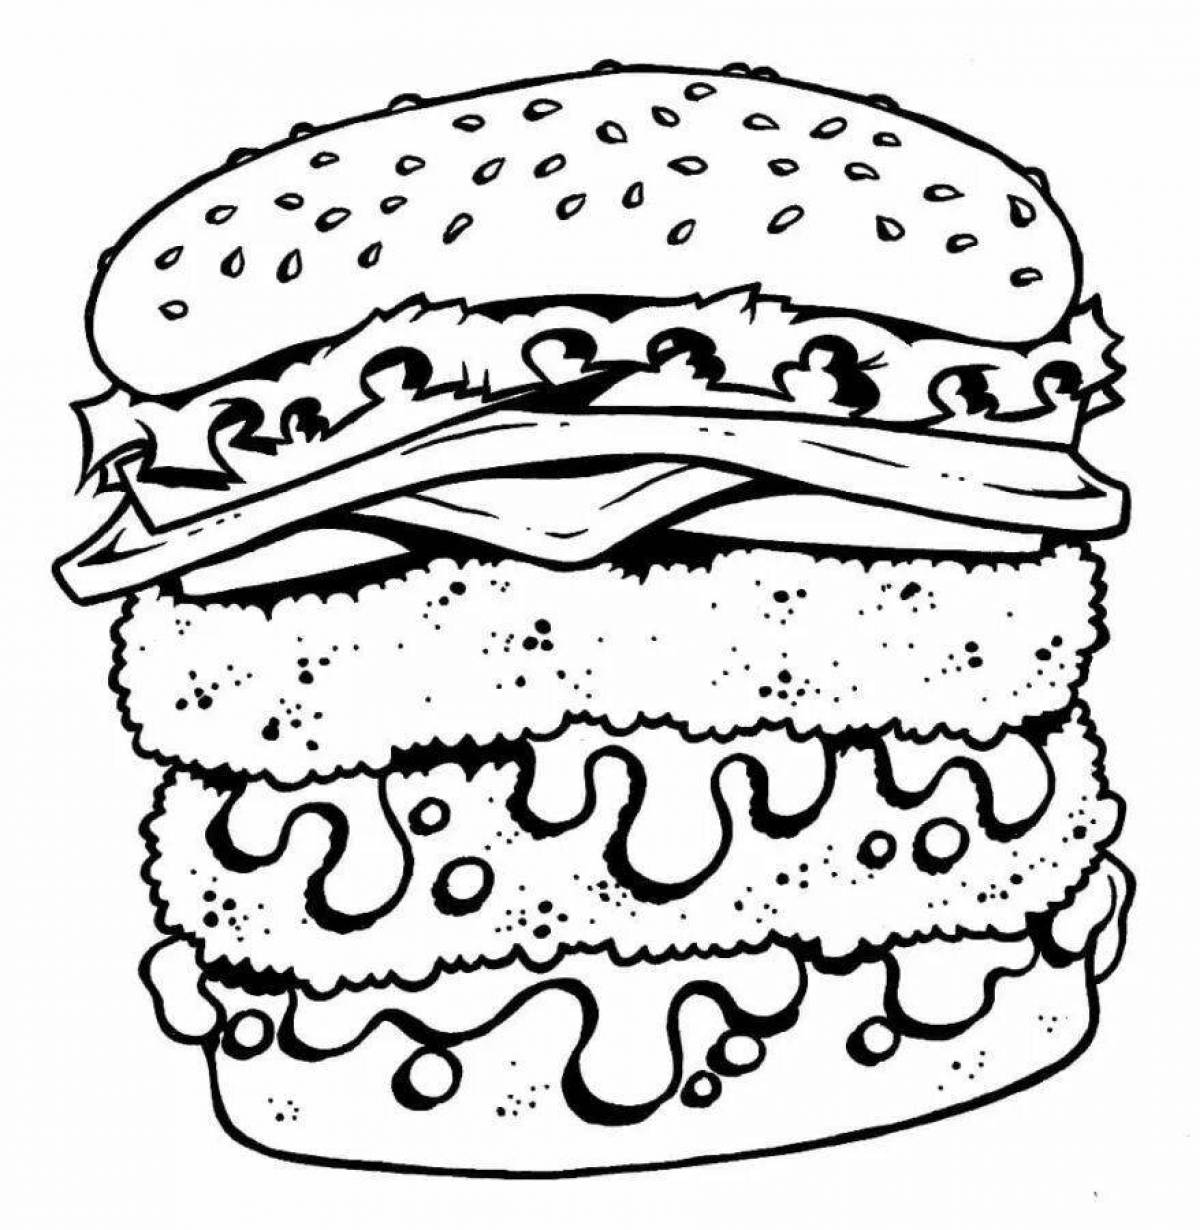 Boxy boo burger coloring page